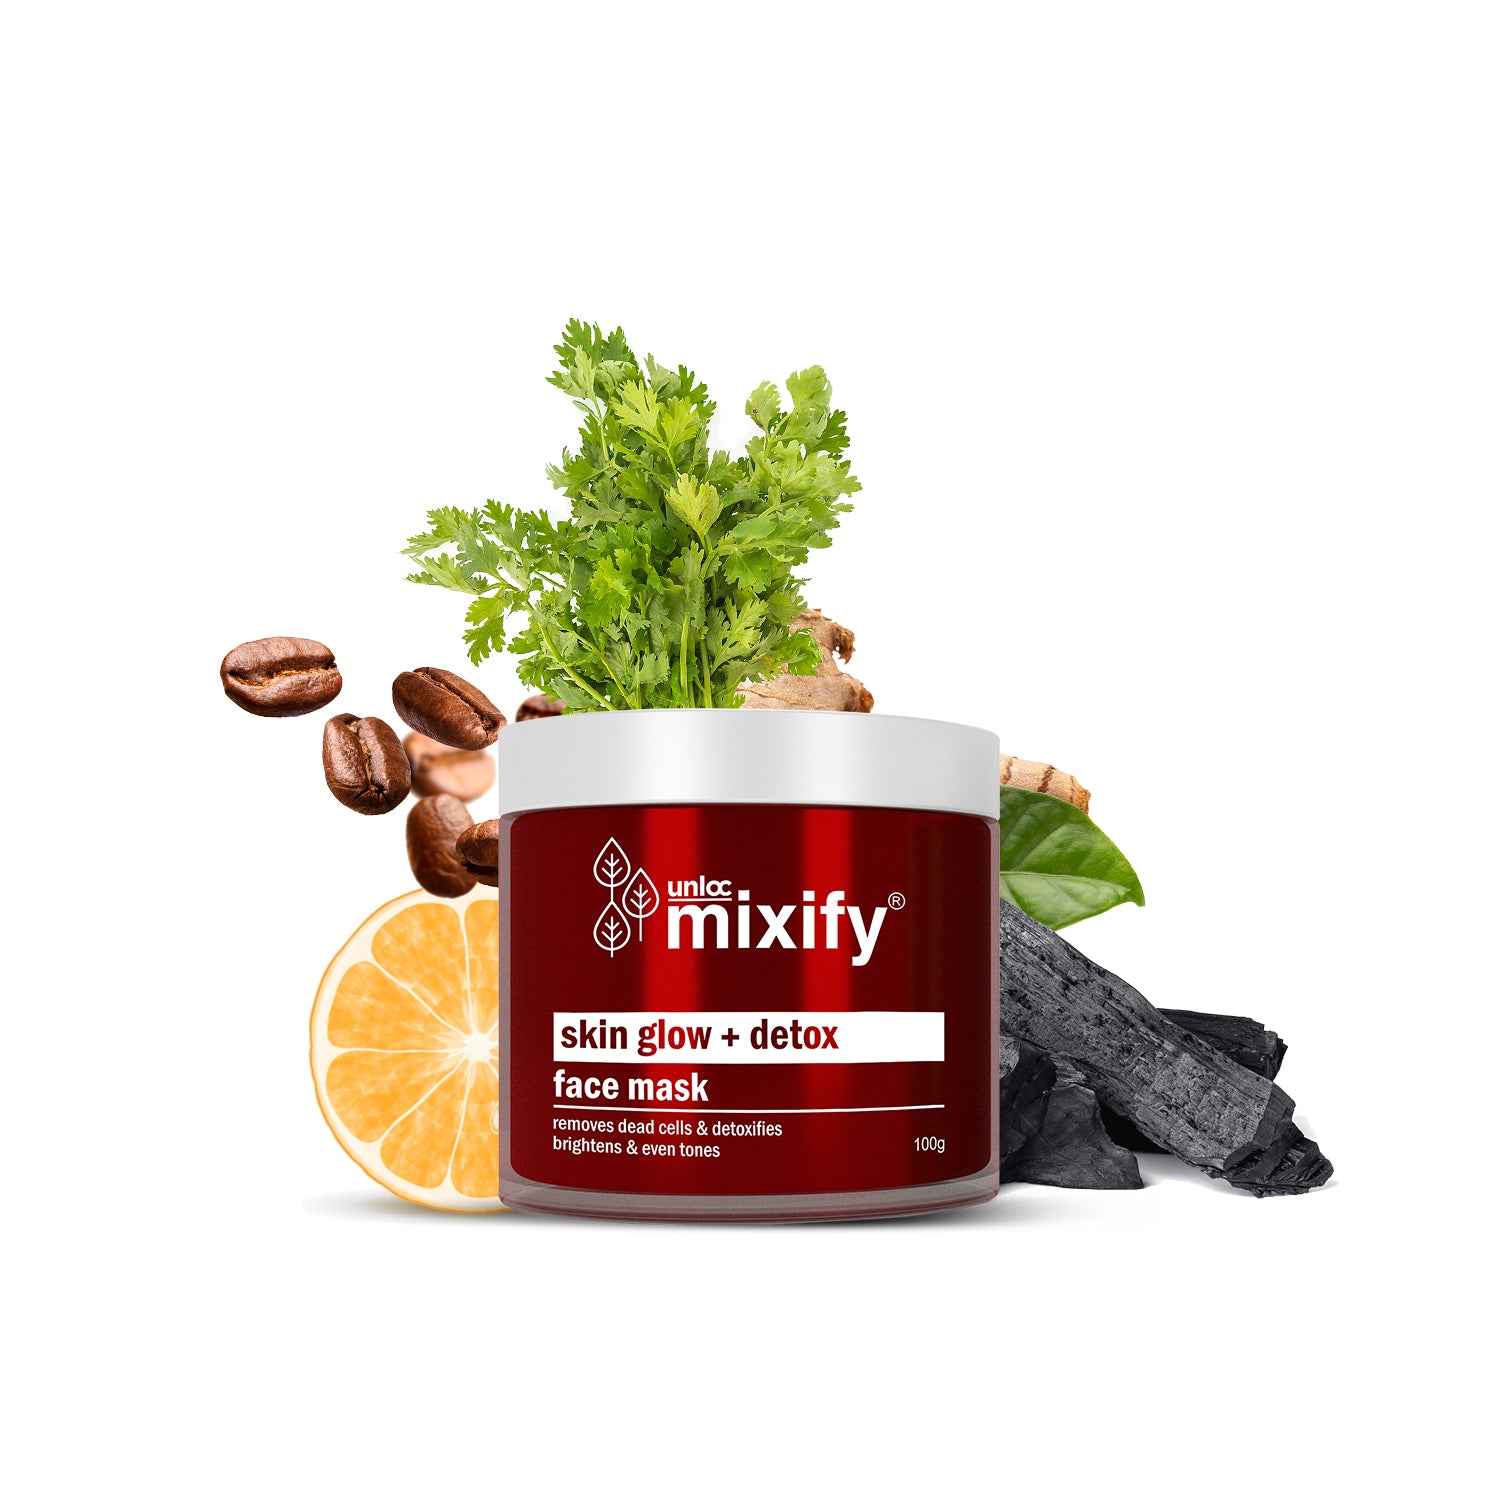 Unloc Mixify Skin Glow + Detox Face Mask - 100g